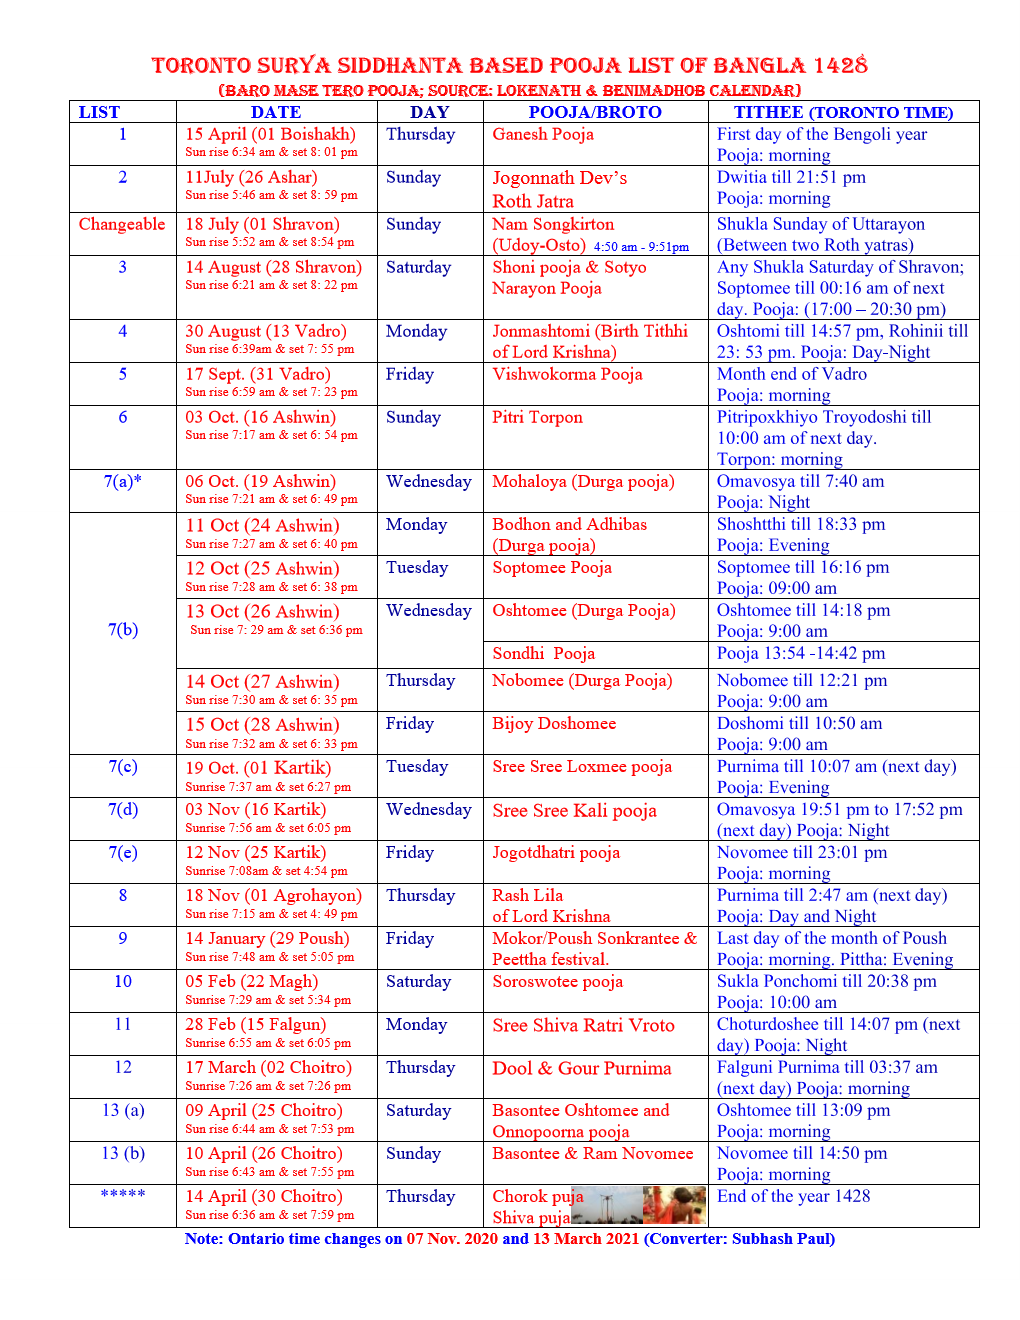 BCHM Events Calendar 1428 (Puja/Broto List for Bangla 1428)